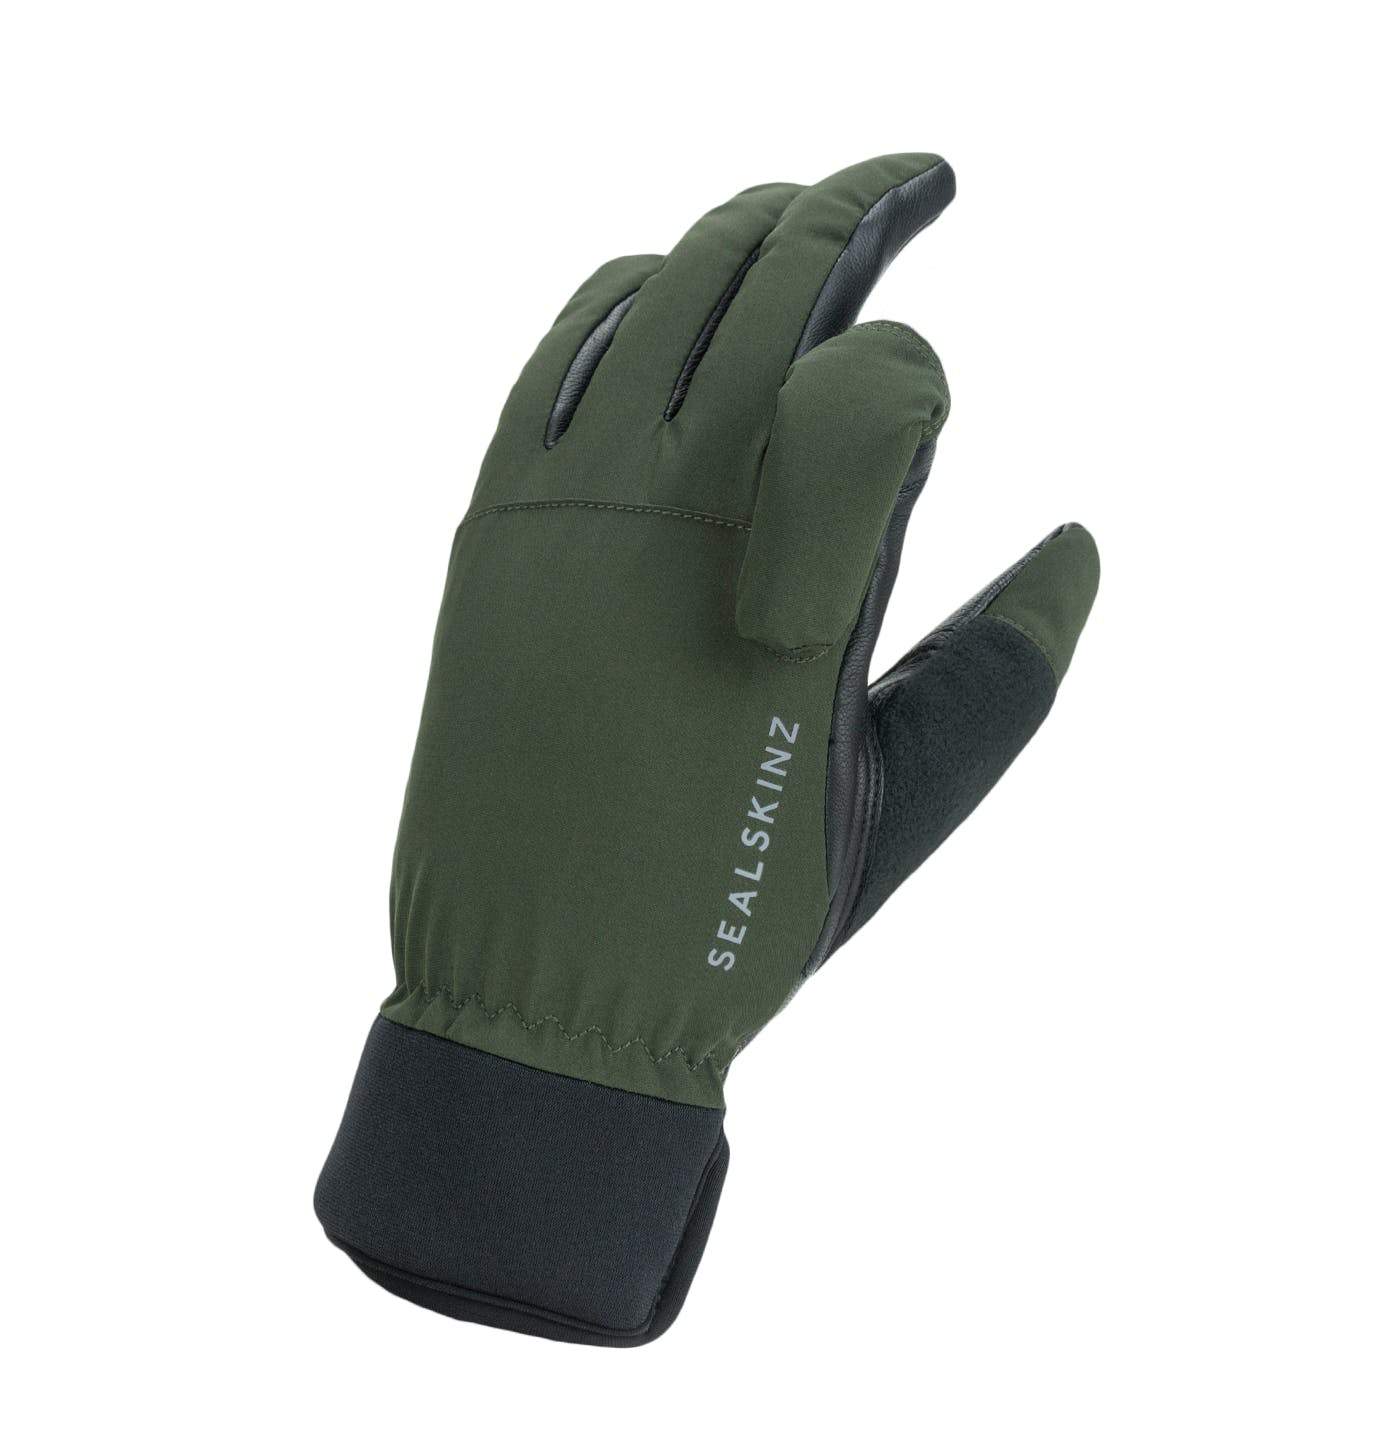 Waterproof All Weather Shooting Glove - Olive Green/Black